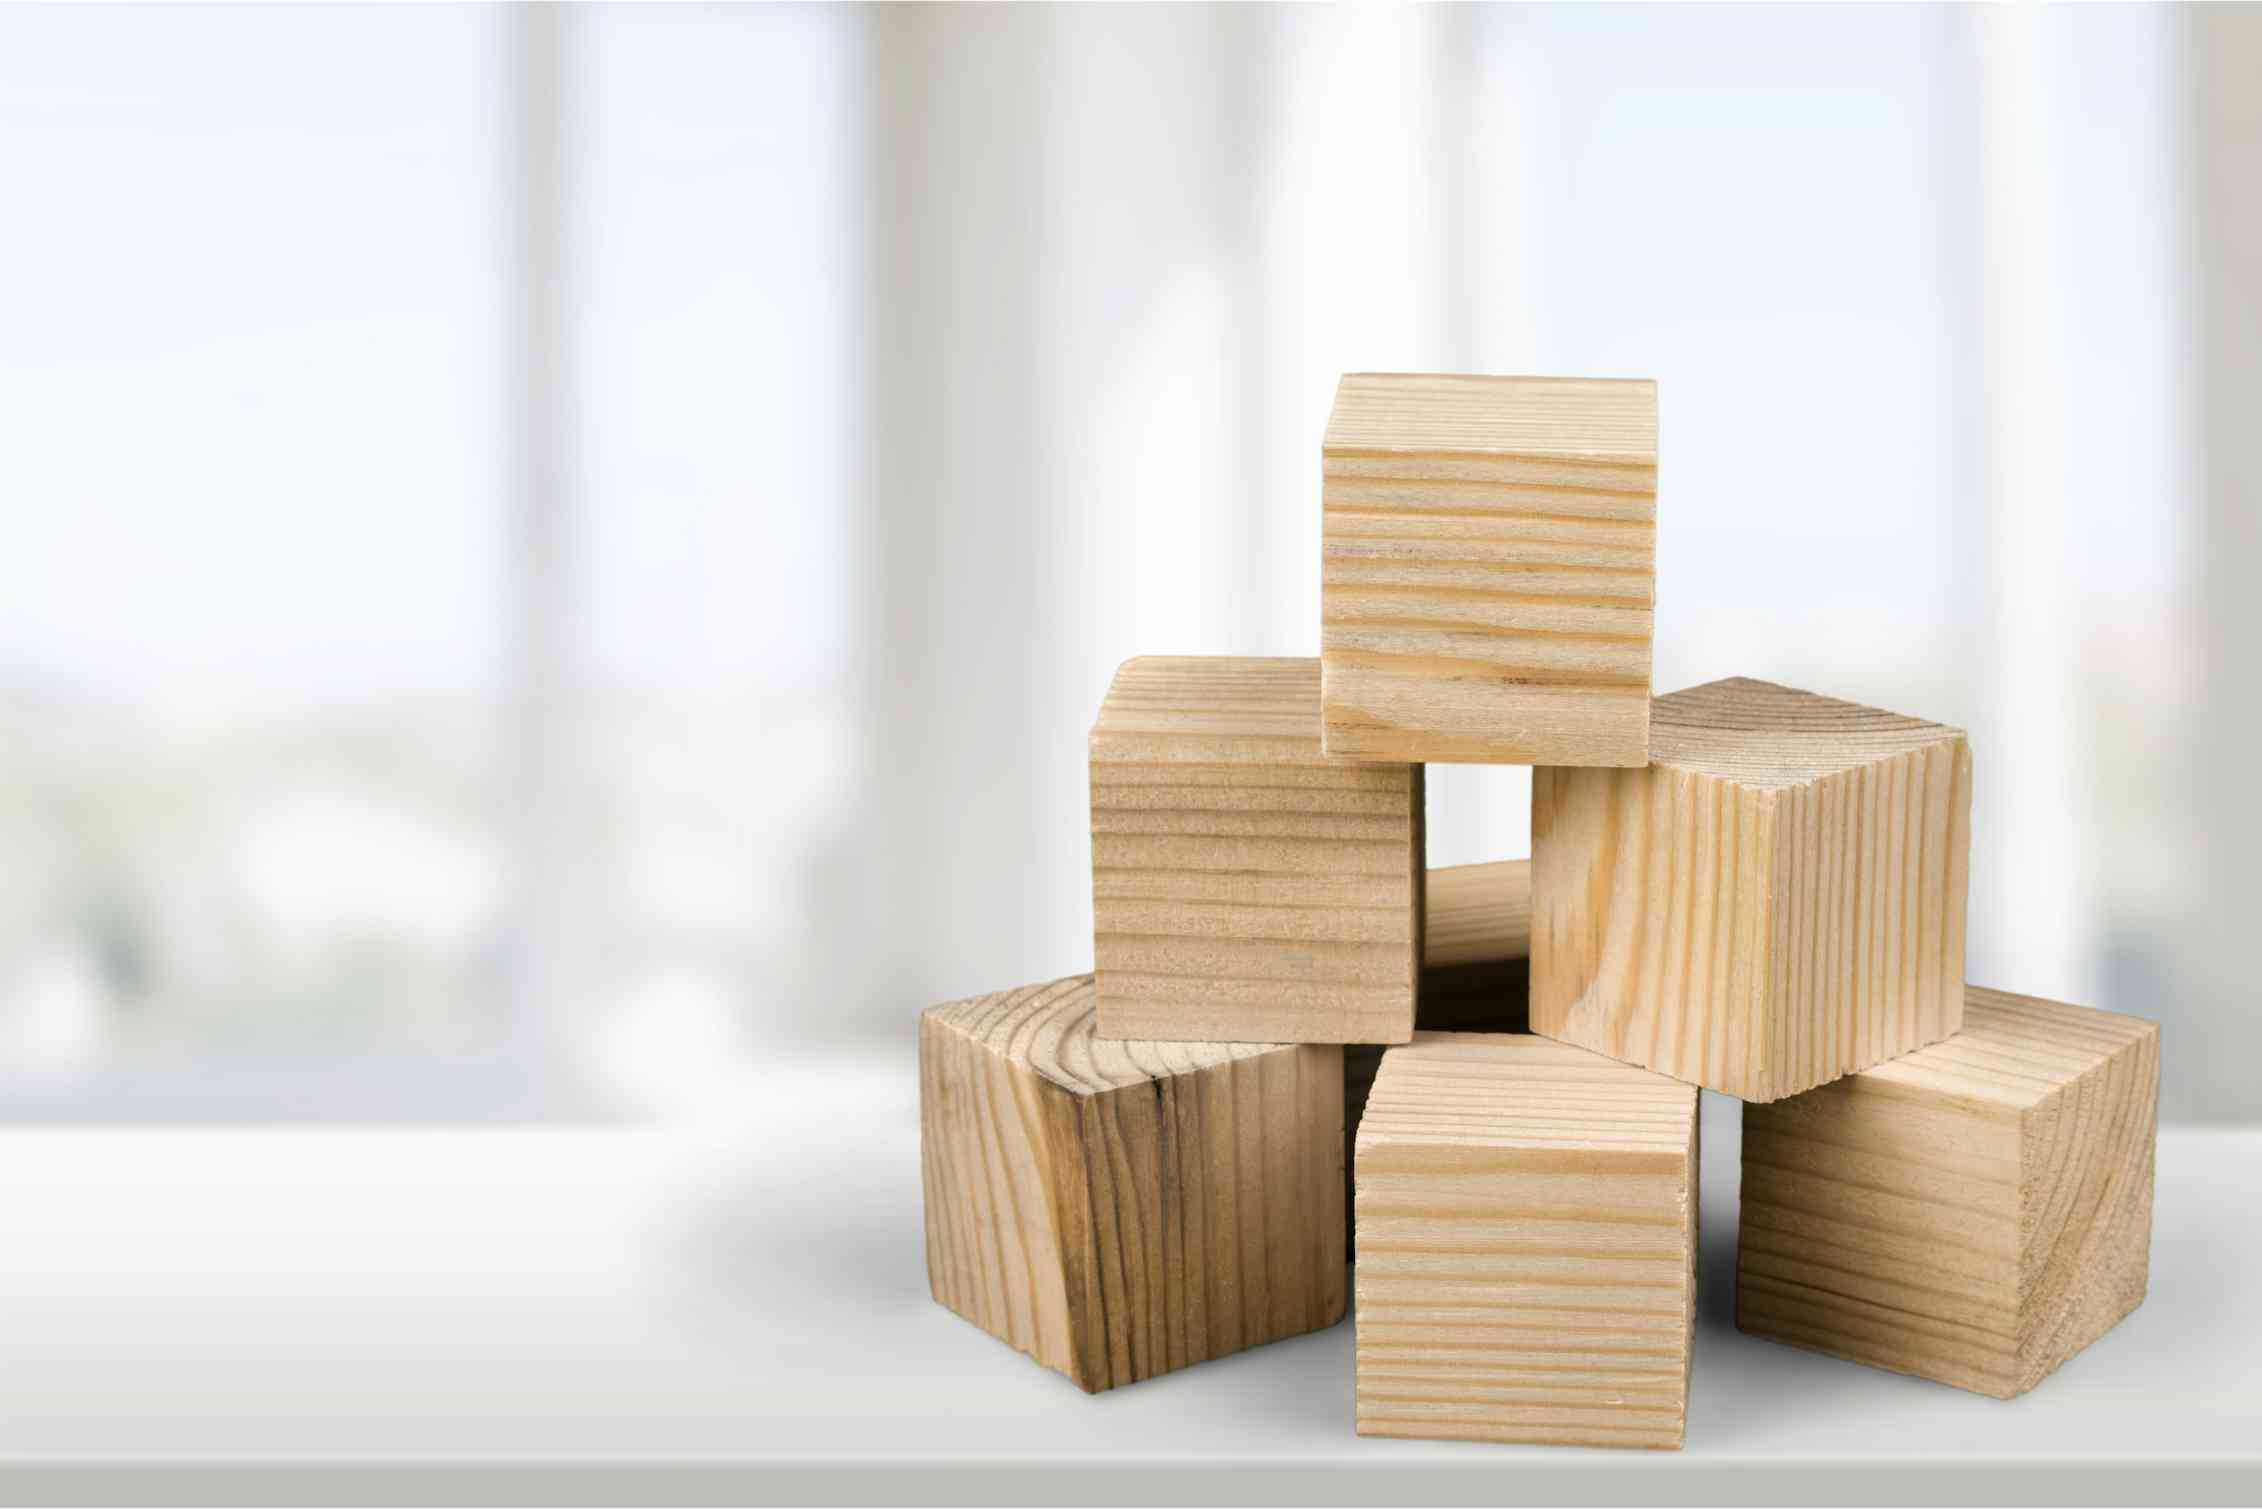 Wooden blocks.